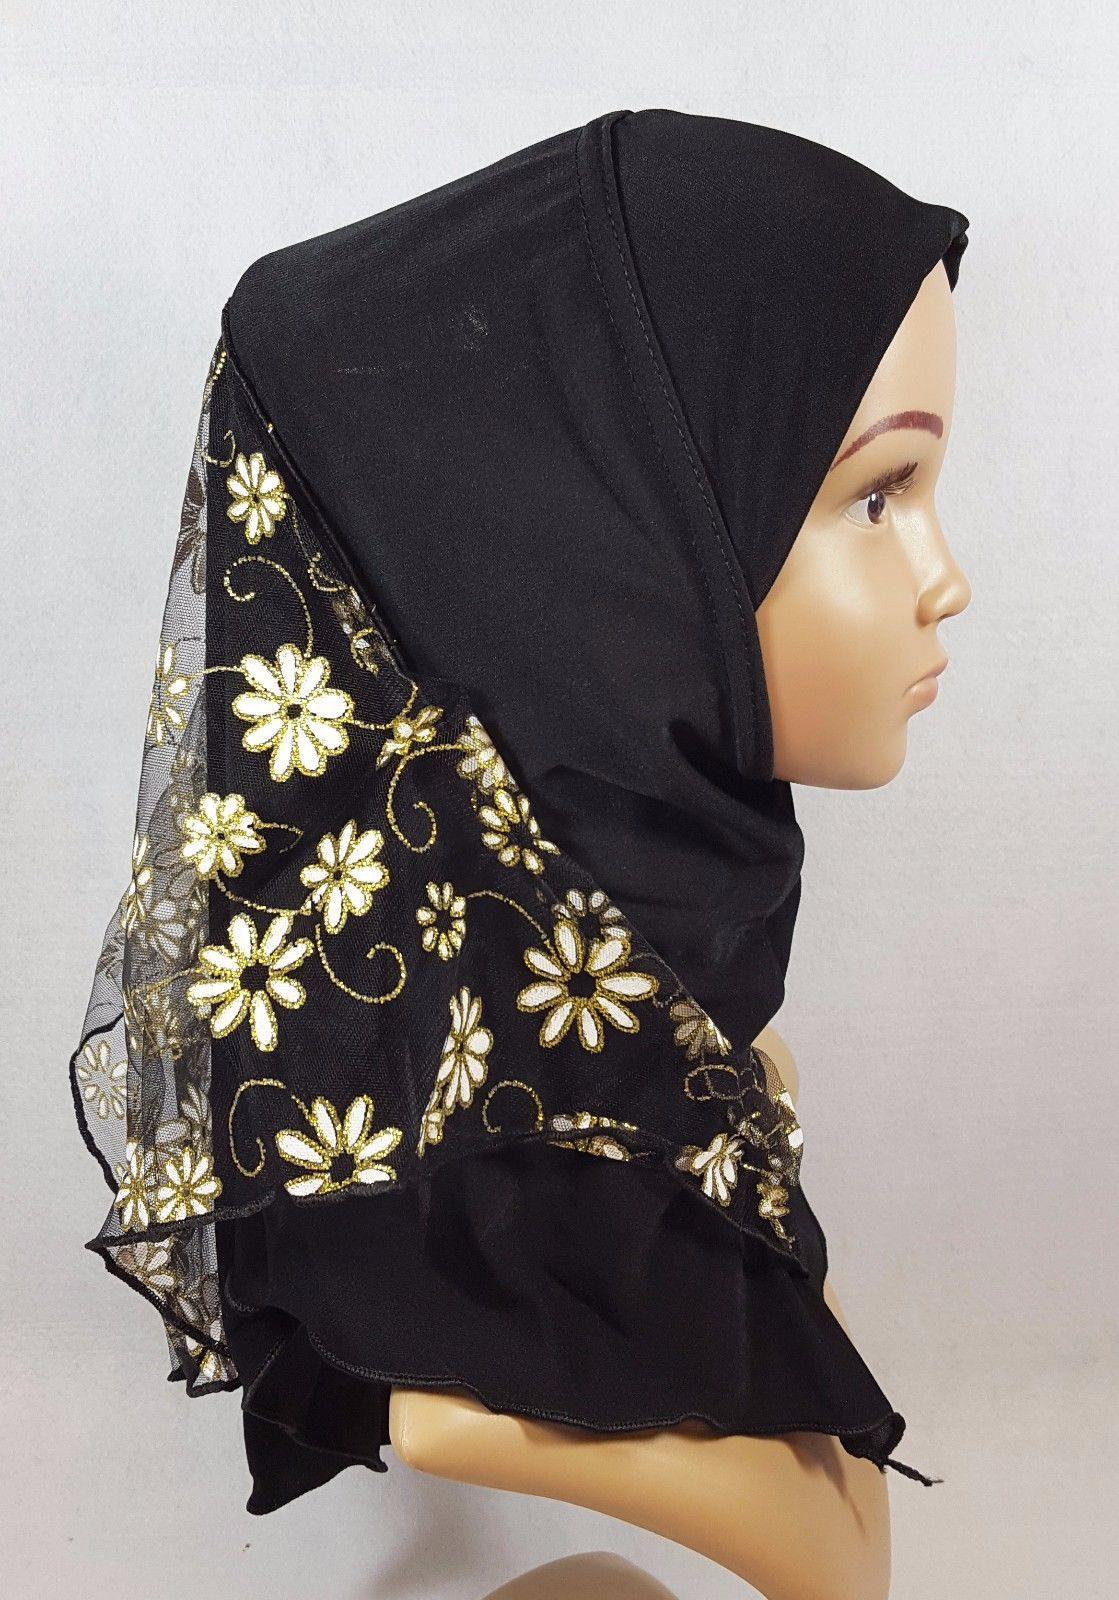 NEW Crystal Hemp Toddler Children Kids Hijab Islamic Scarf Shawls 2-8T - Arabian Shopping Zone